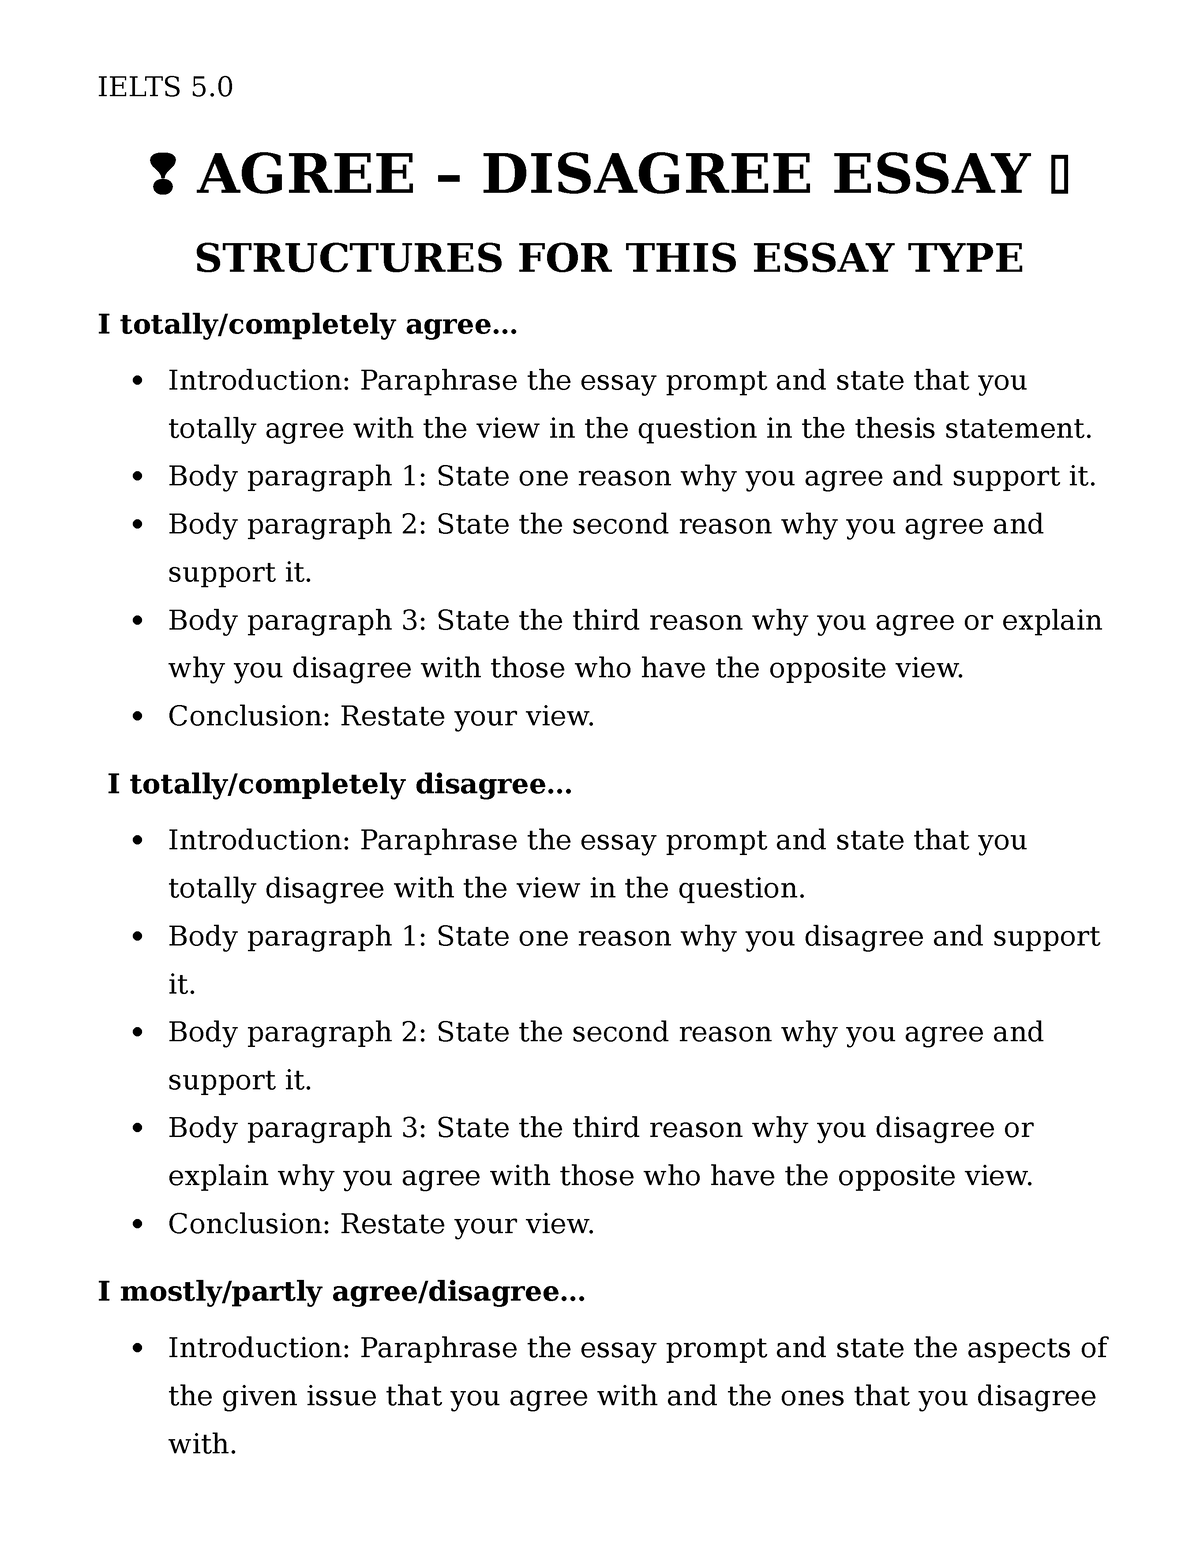 agree disagree essay thesis statement